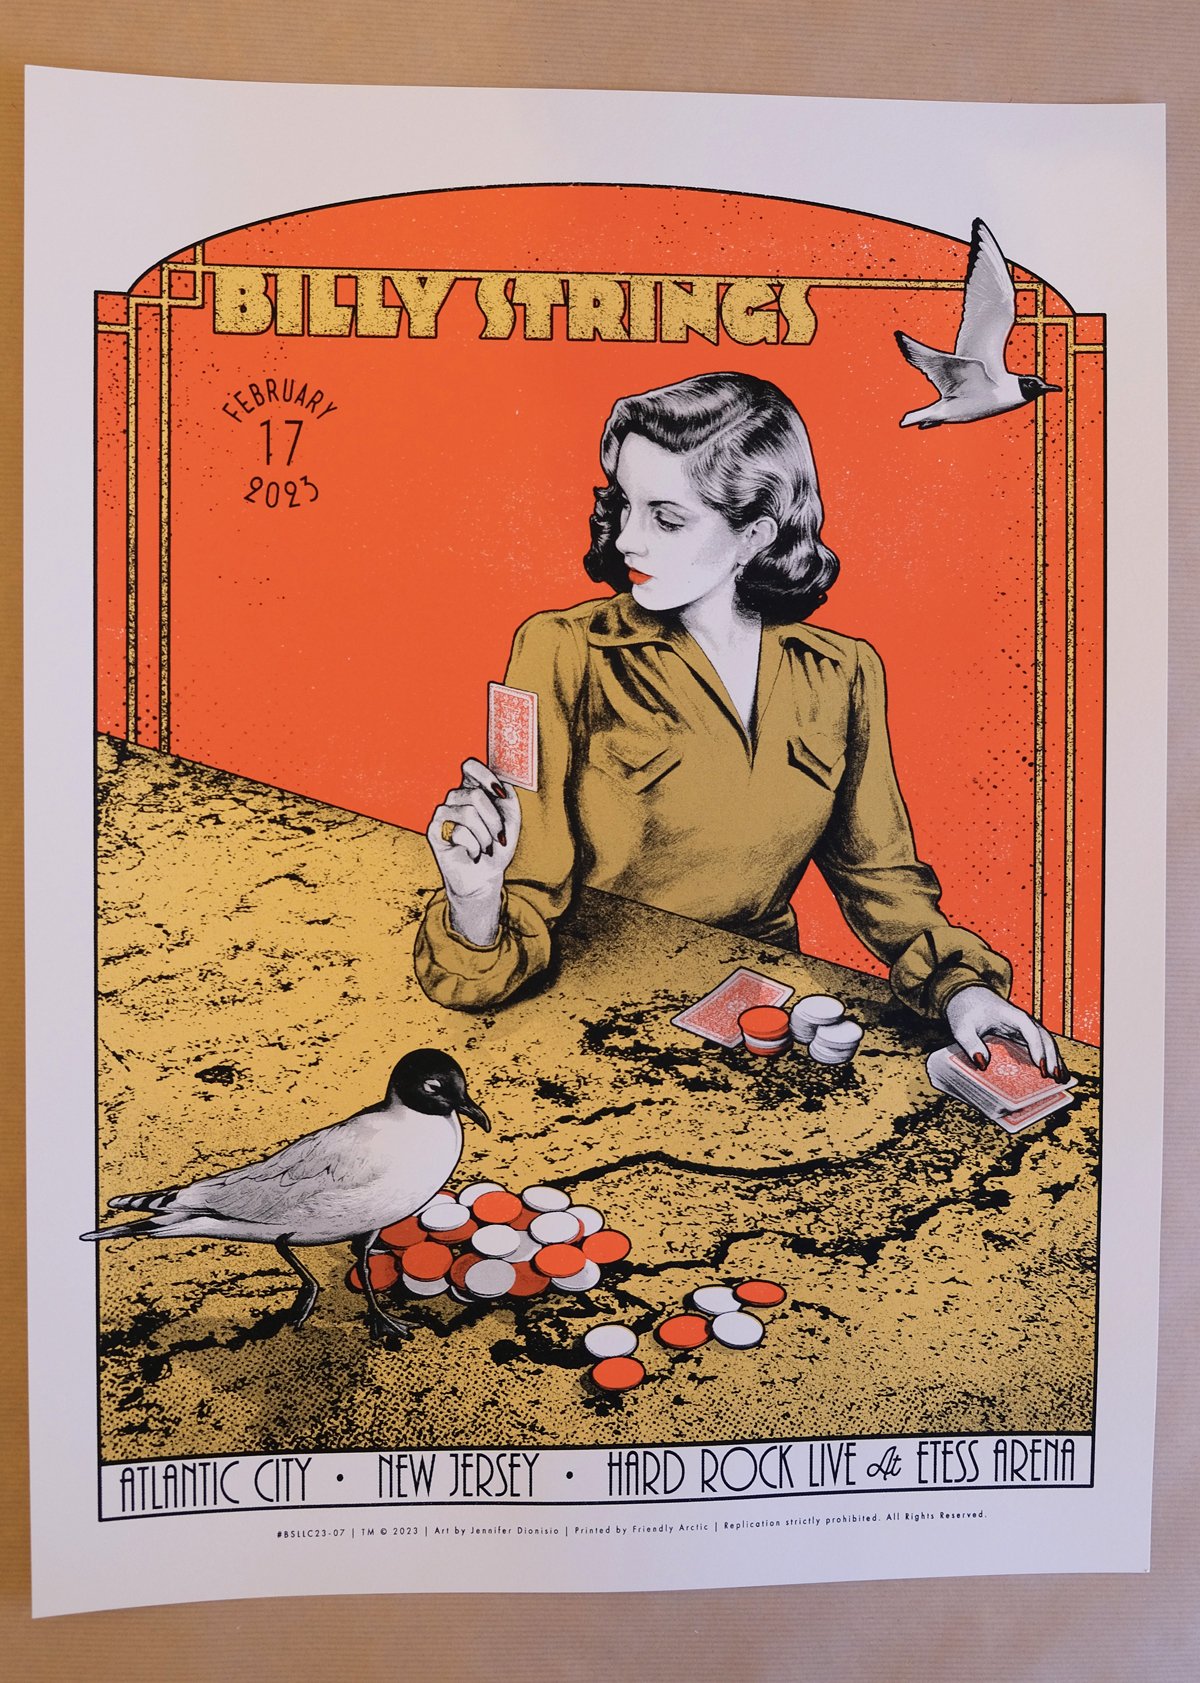  Billy Strings - Atlantic City - Screenprint - 2/3 - Feb 17